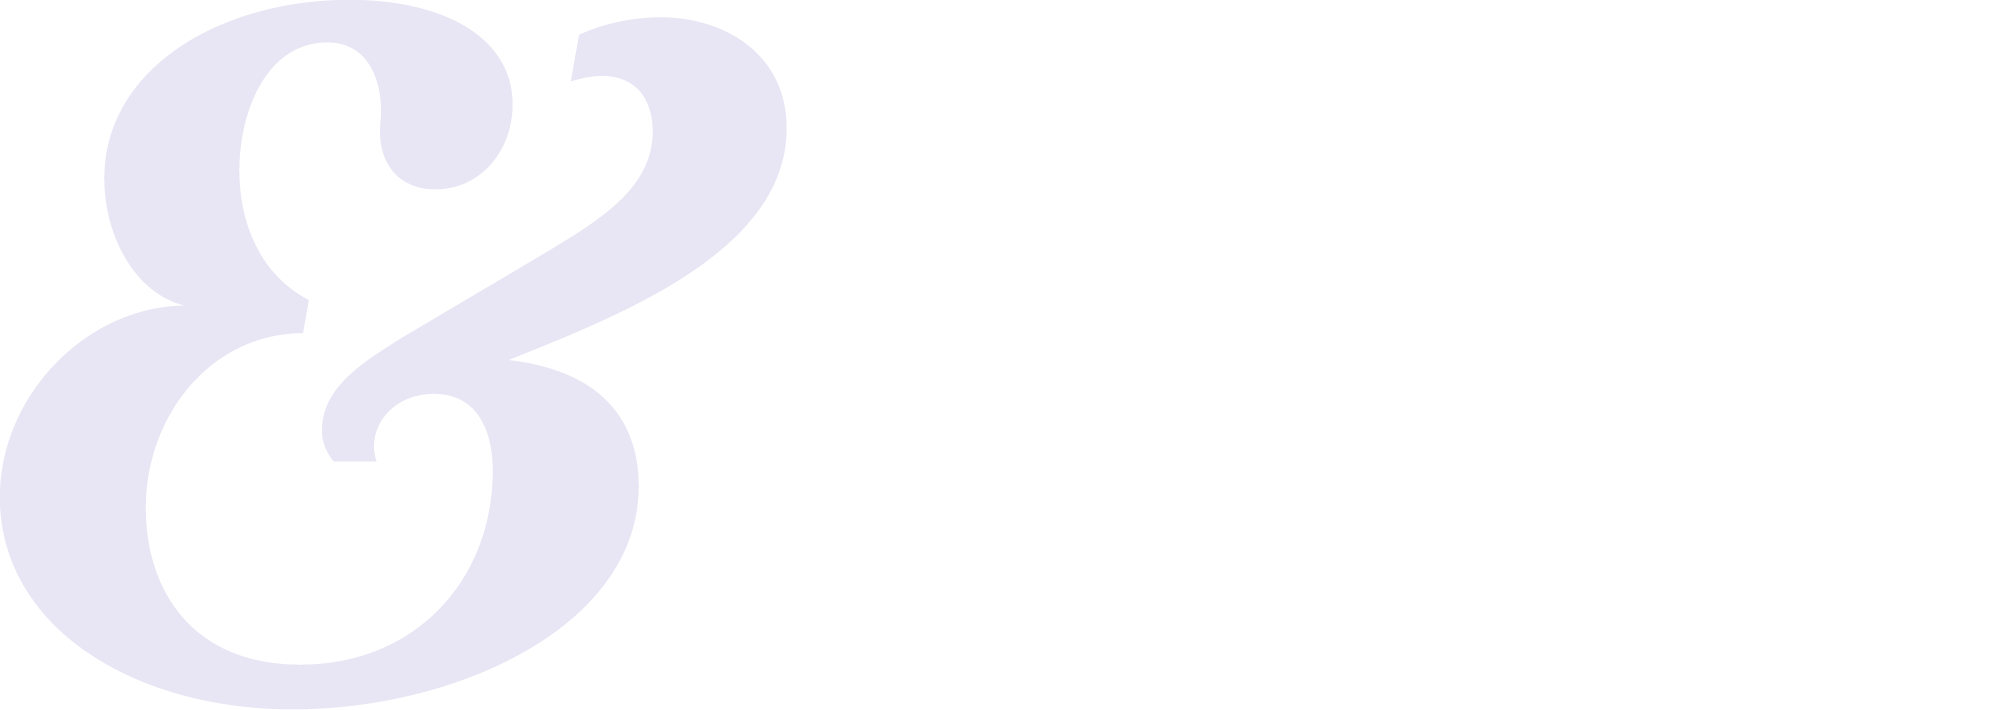 Autotaks logo